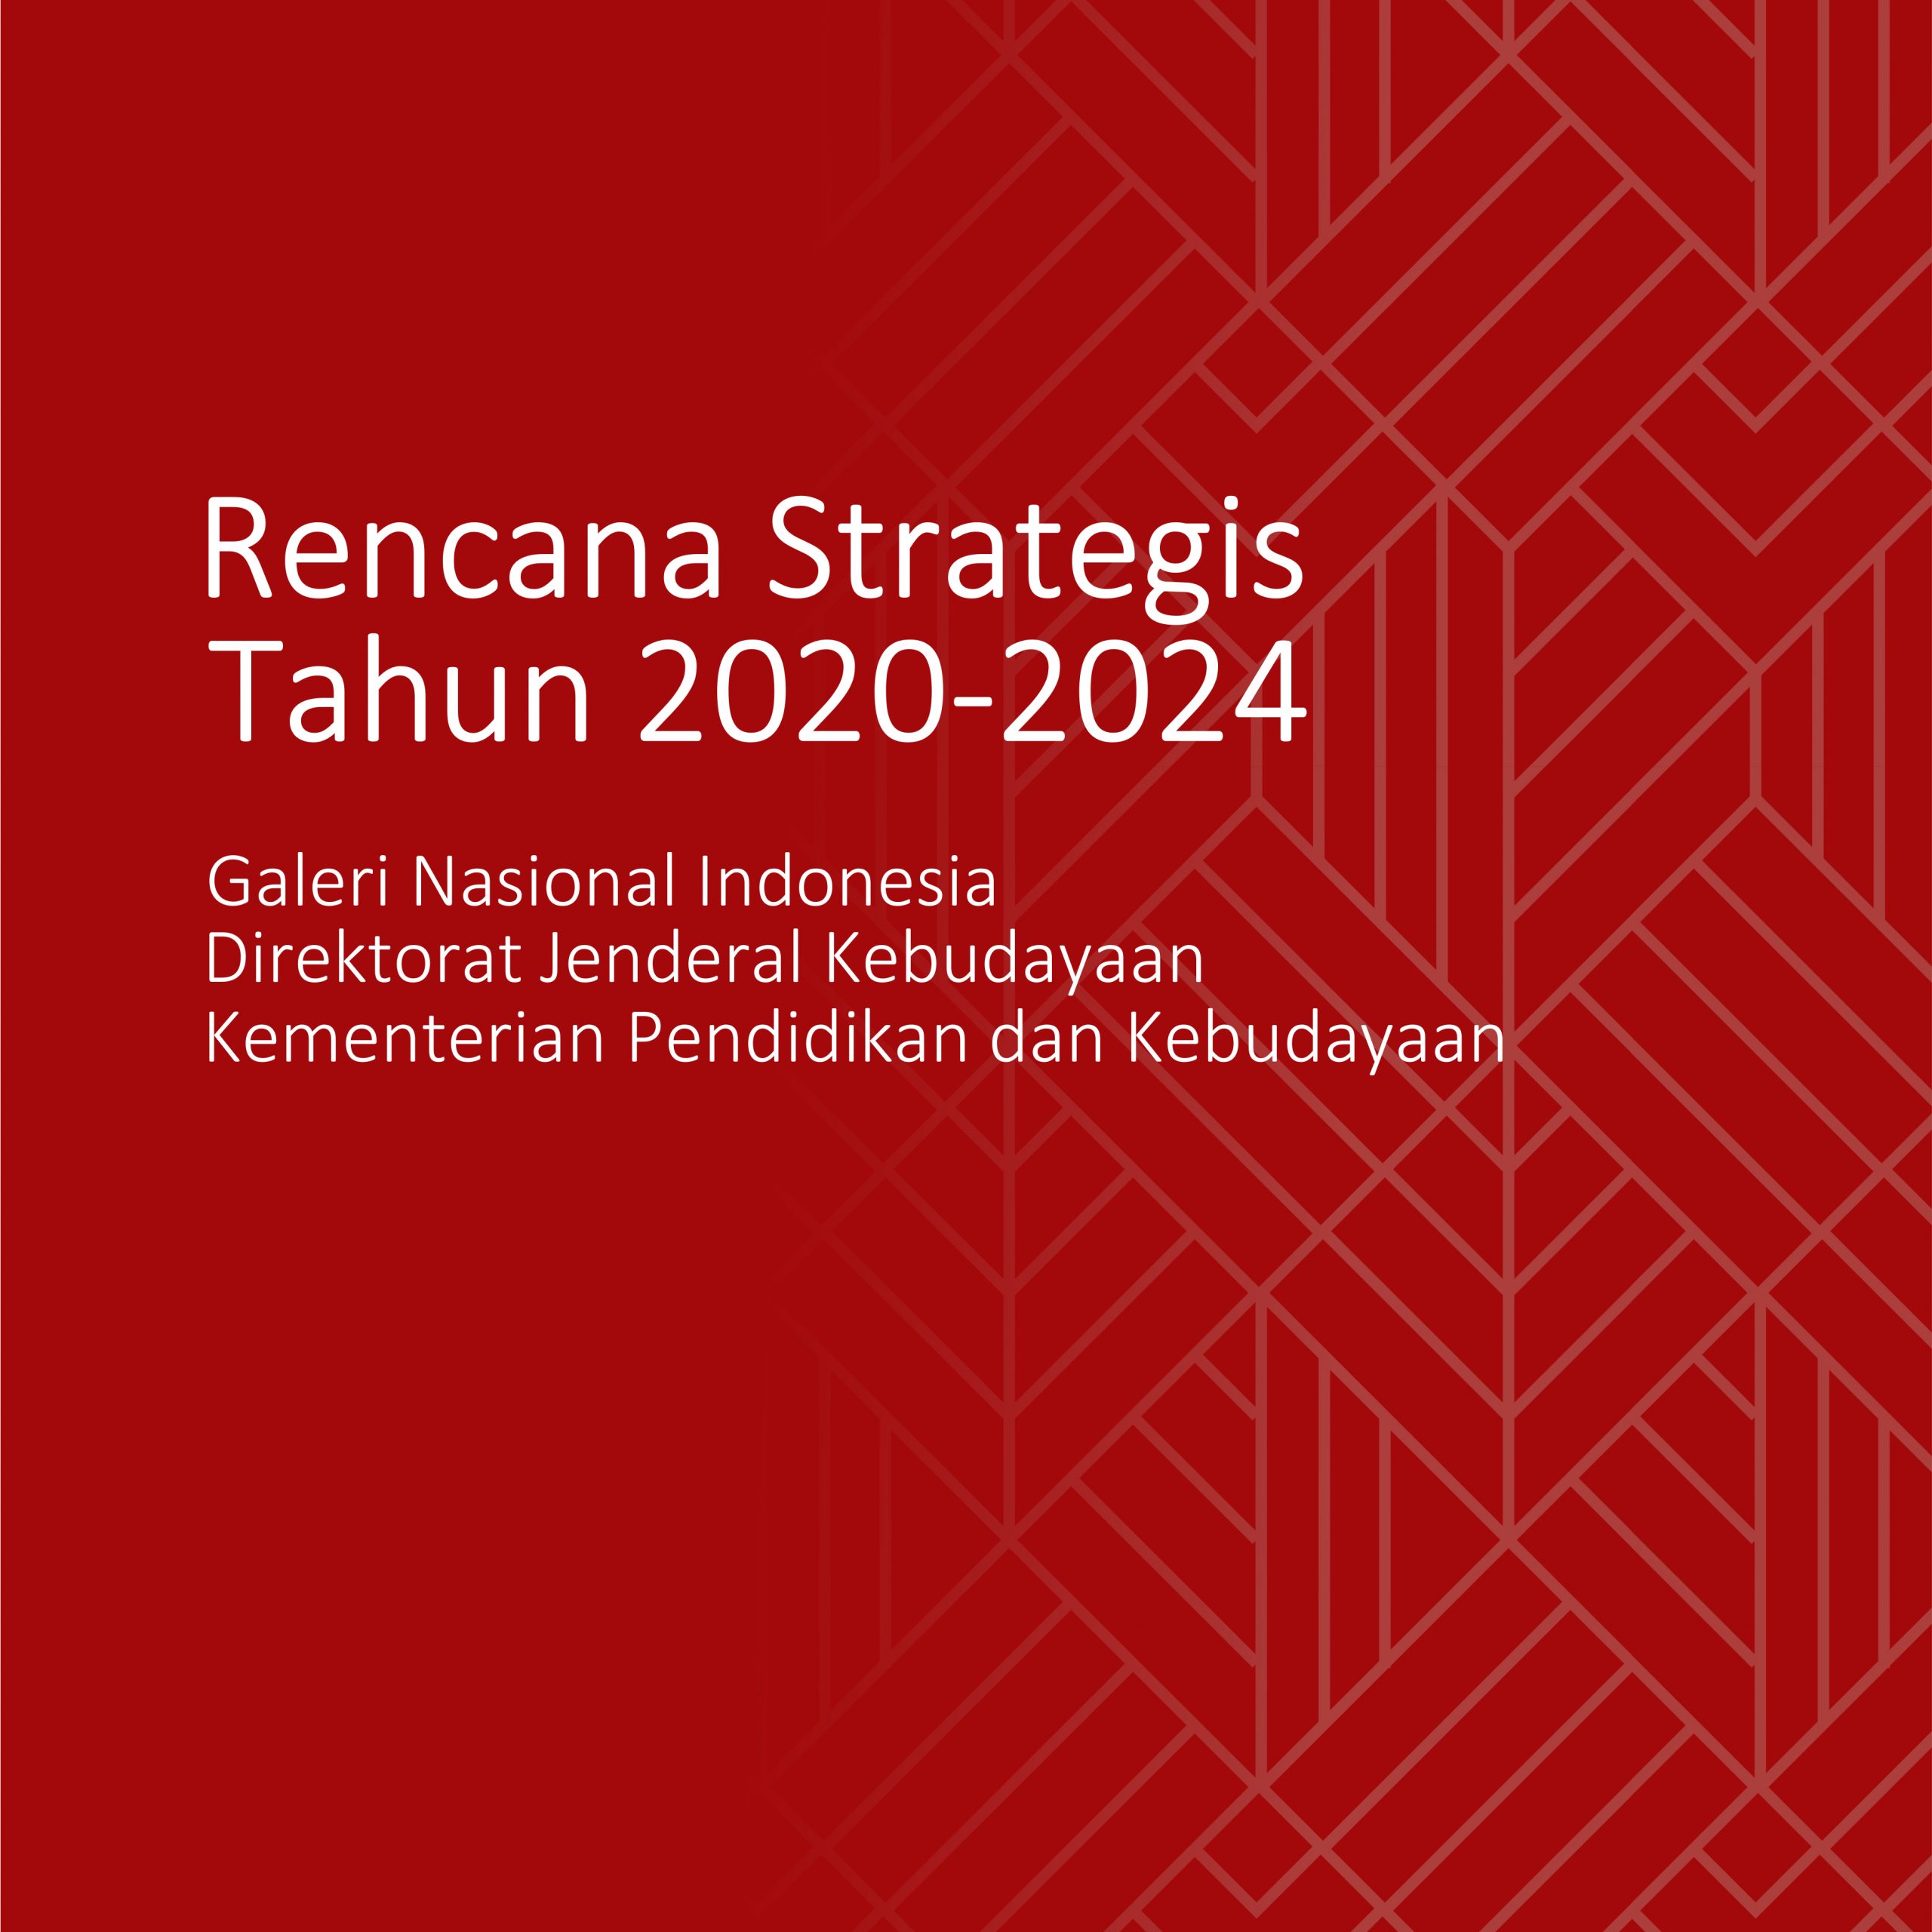 Renstra GNI 2020-2024